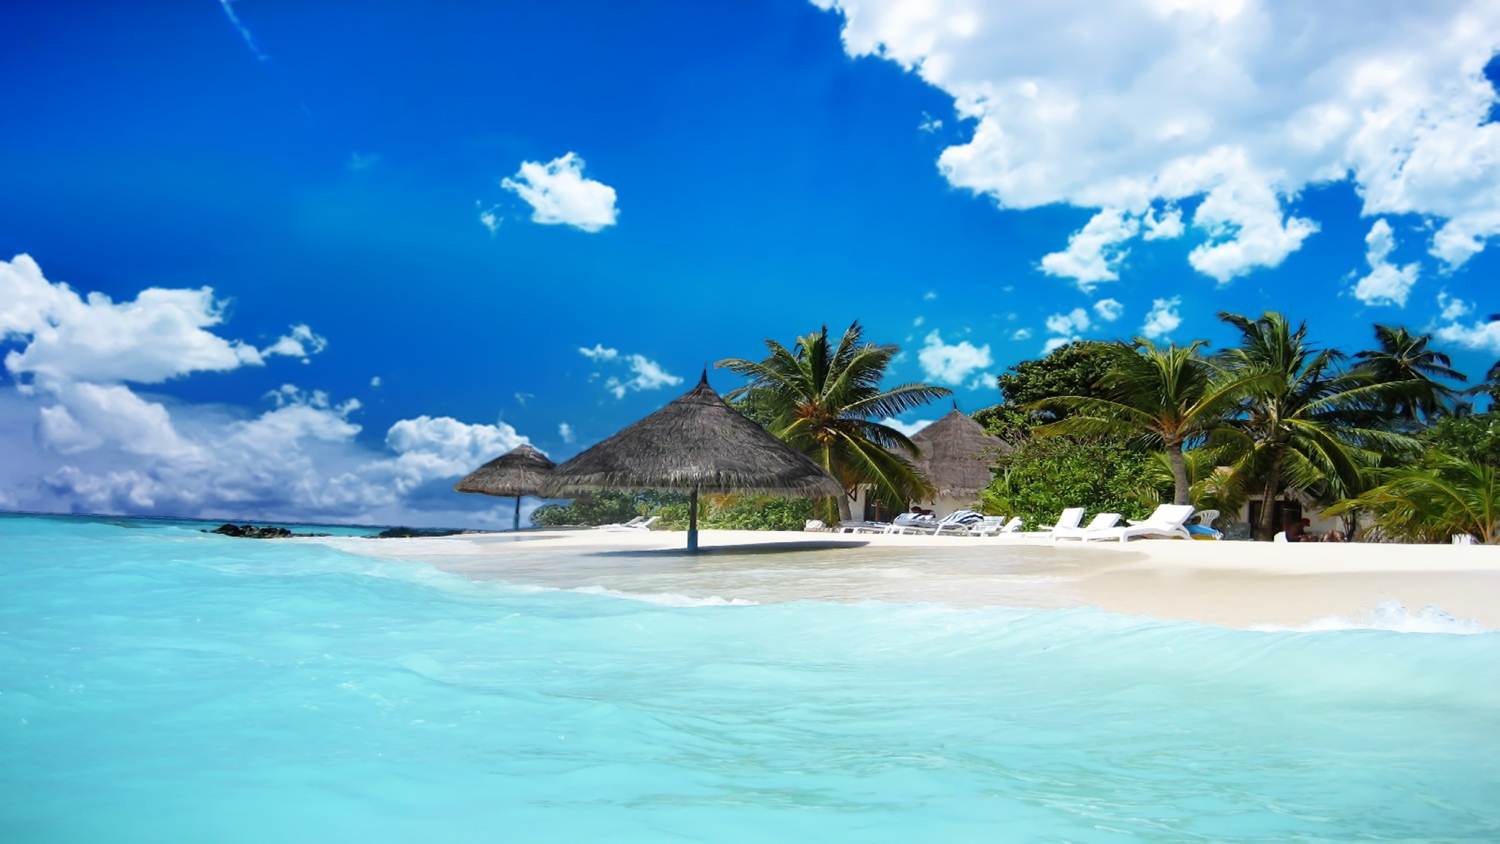 Jamaica E Islas Caym N Amena Viajes Y Turismo Online